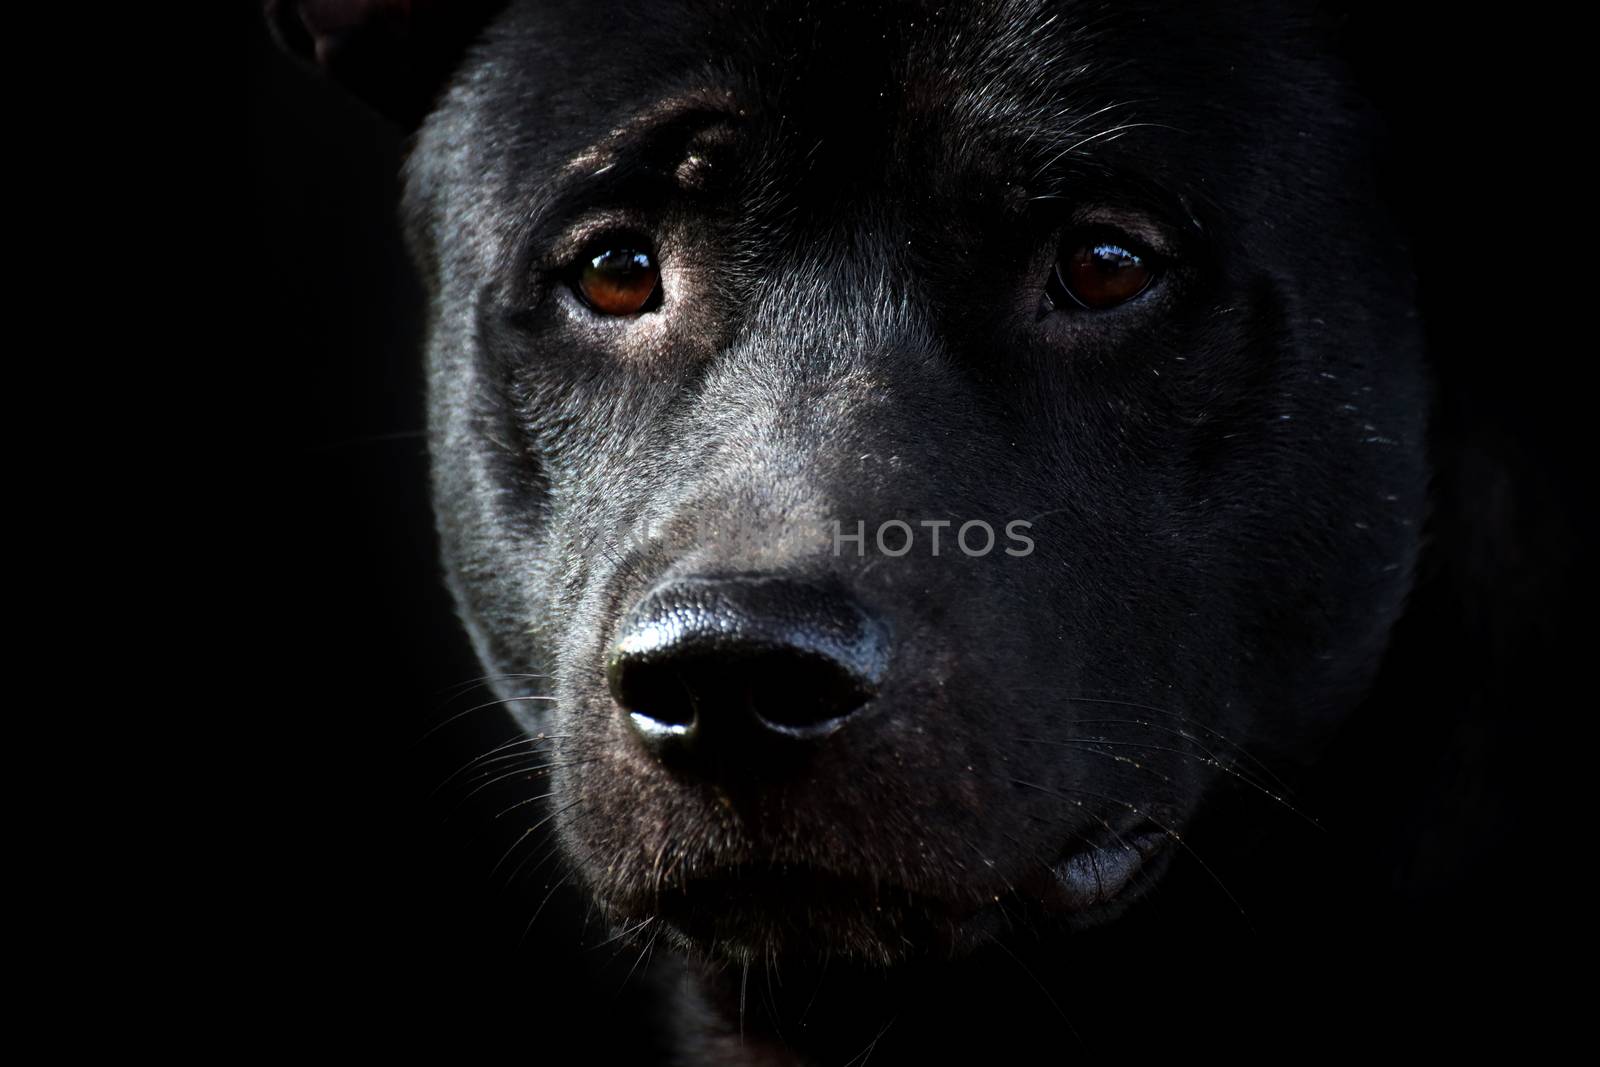 Dog, Black dog face, Sad dog (close up) by cgdeaw